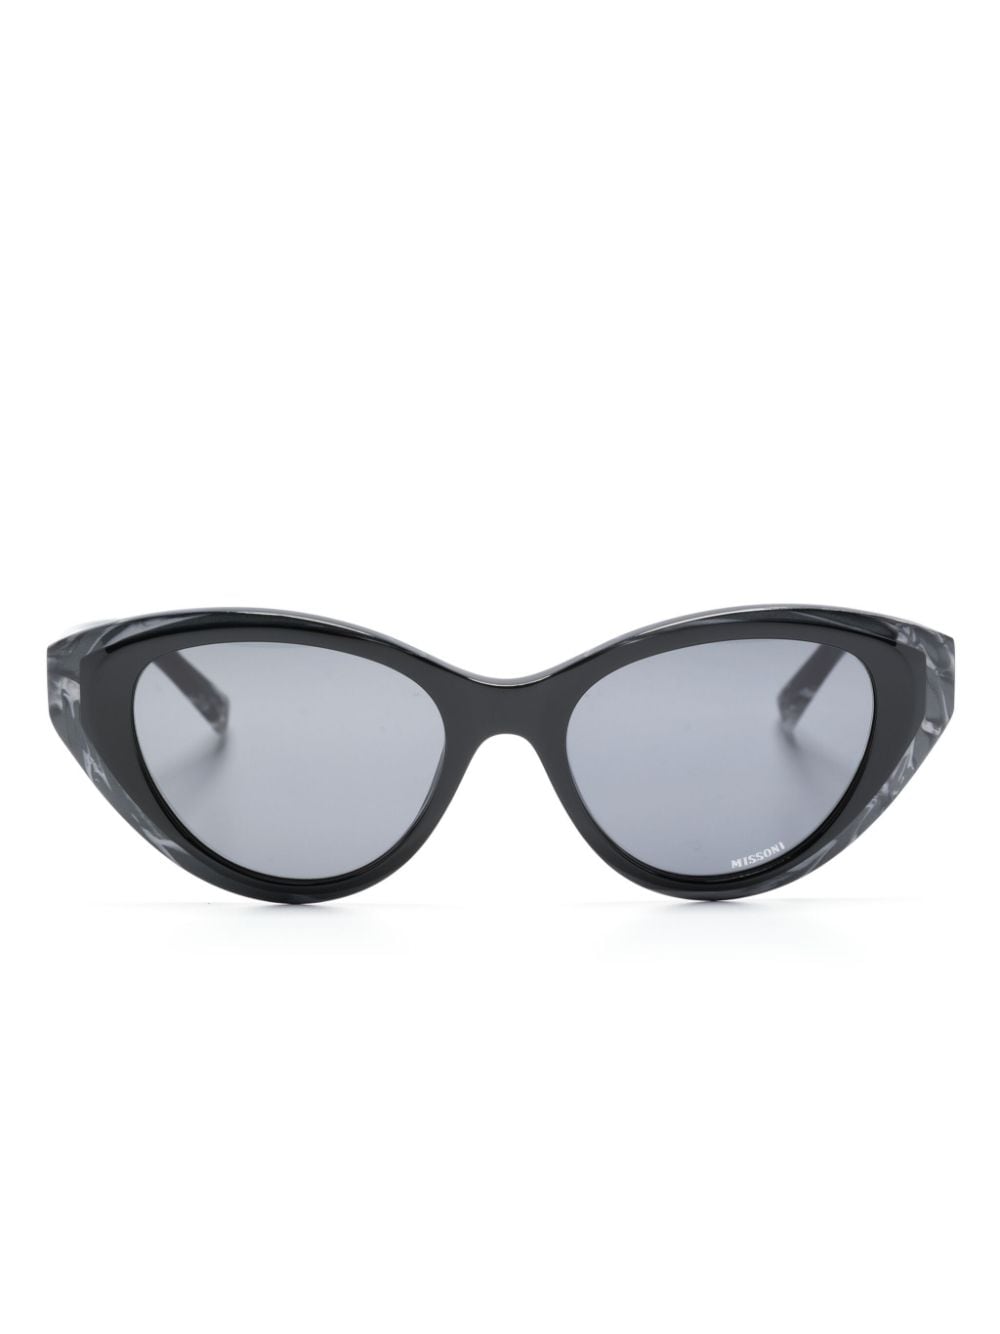 MISSONI EYEWEAR marble-pattern cat-eye sunglasses - Black von MISSONI EYEWEAR